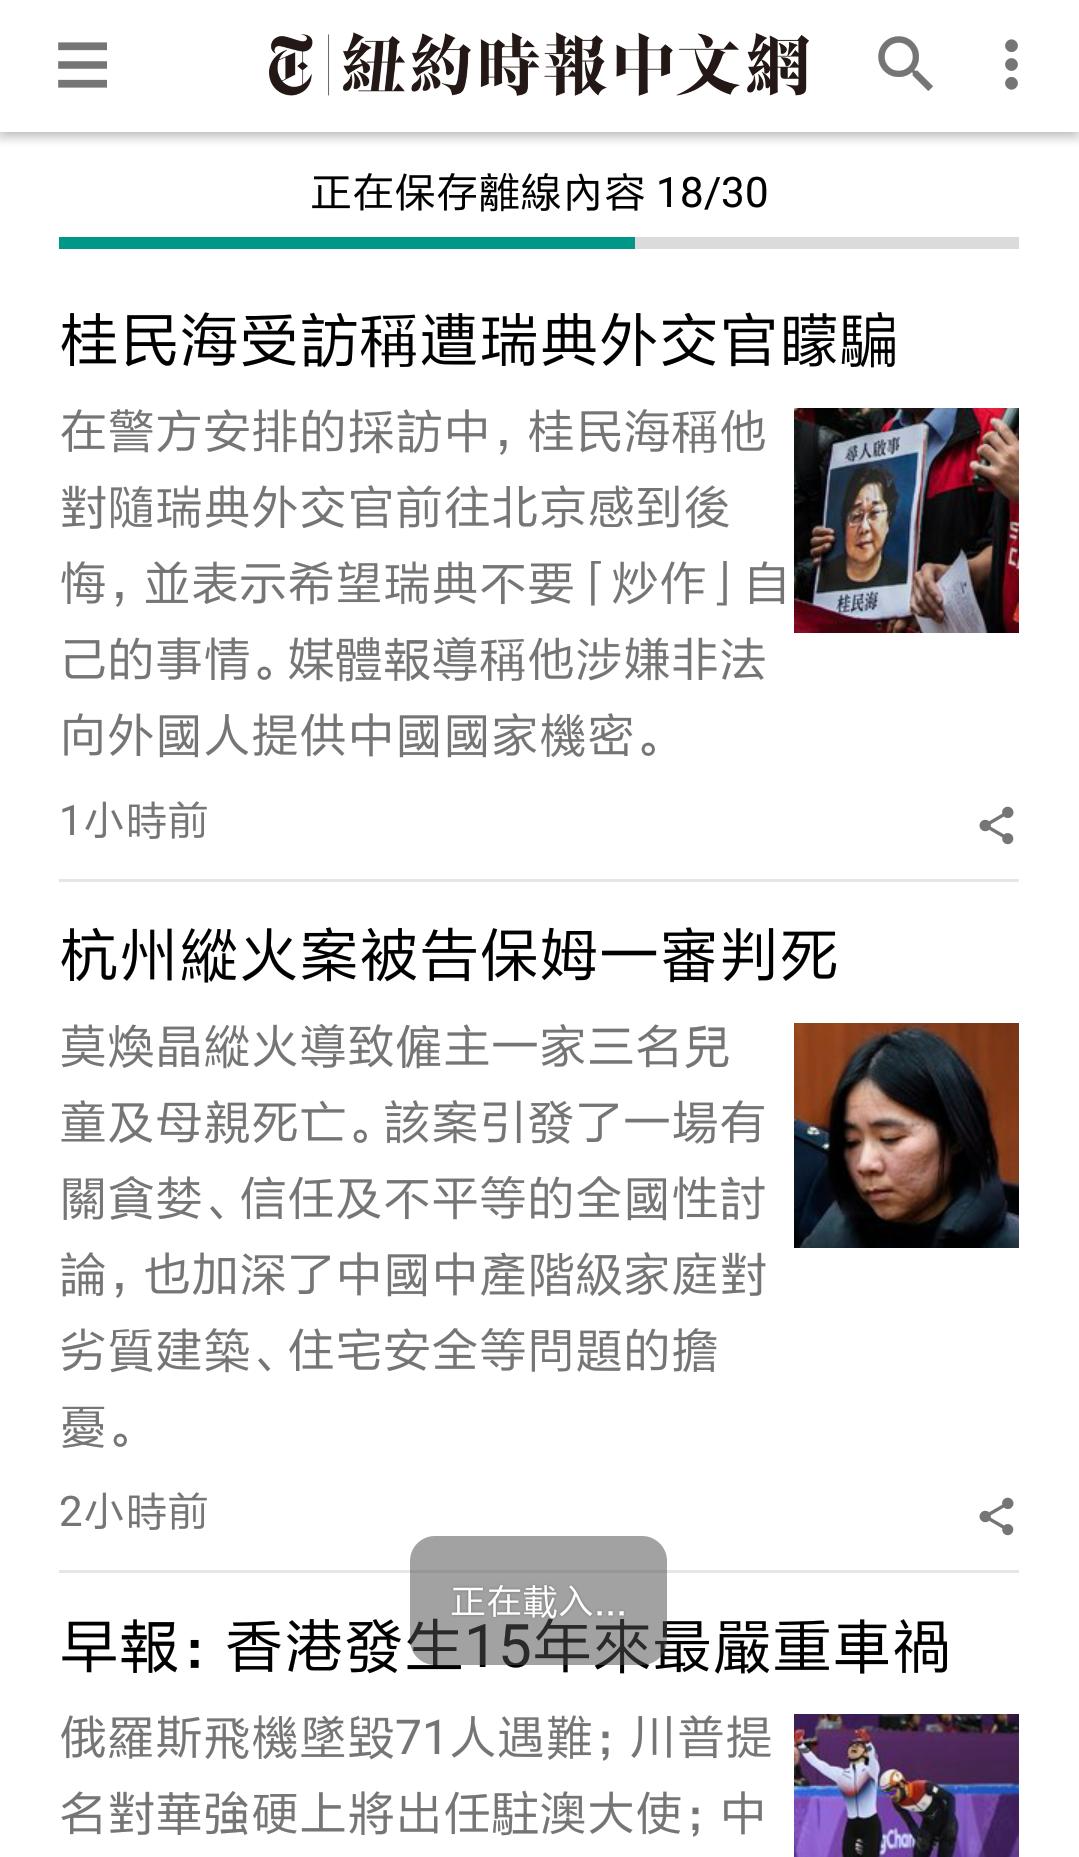 NYTimes - Chinese Edition 1.1.0.29 Screenshot 1